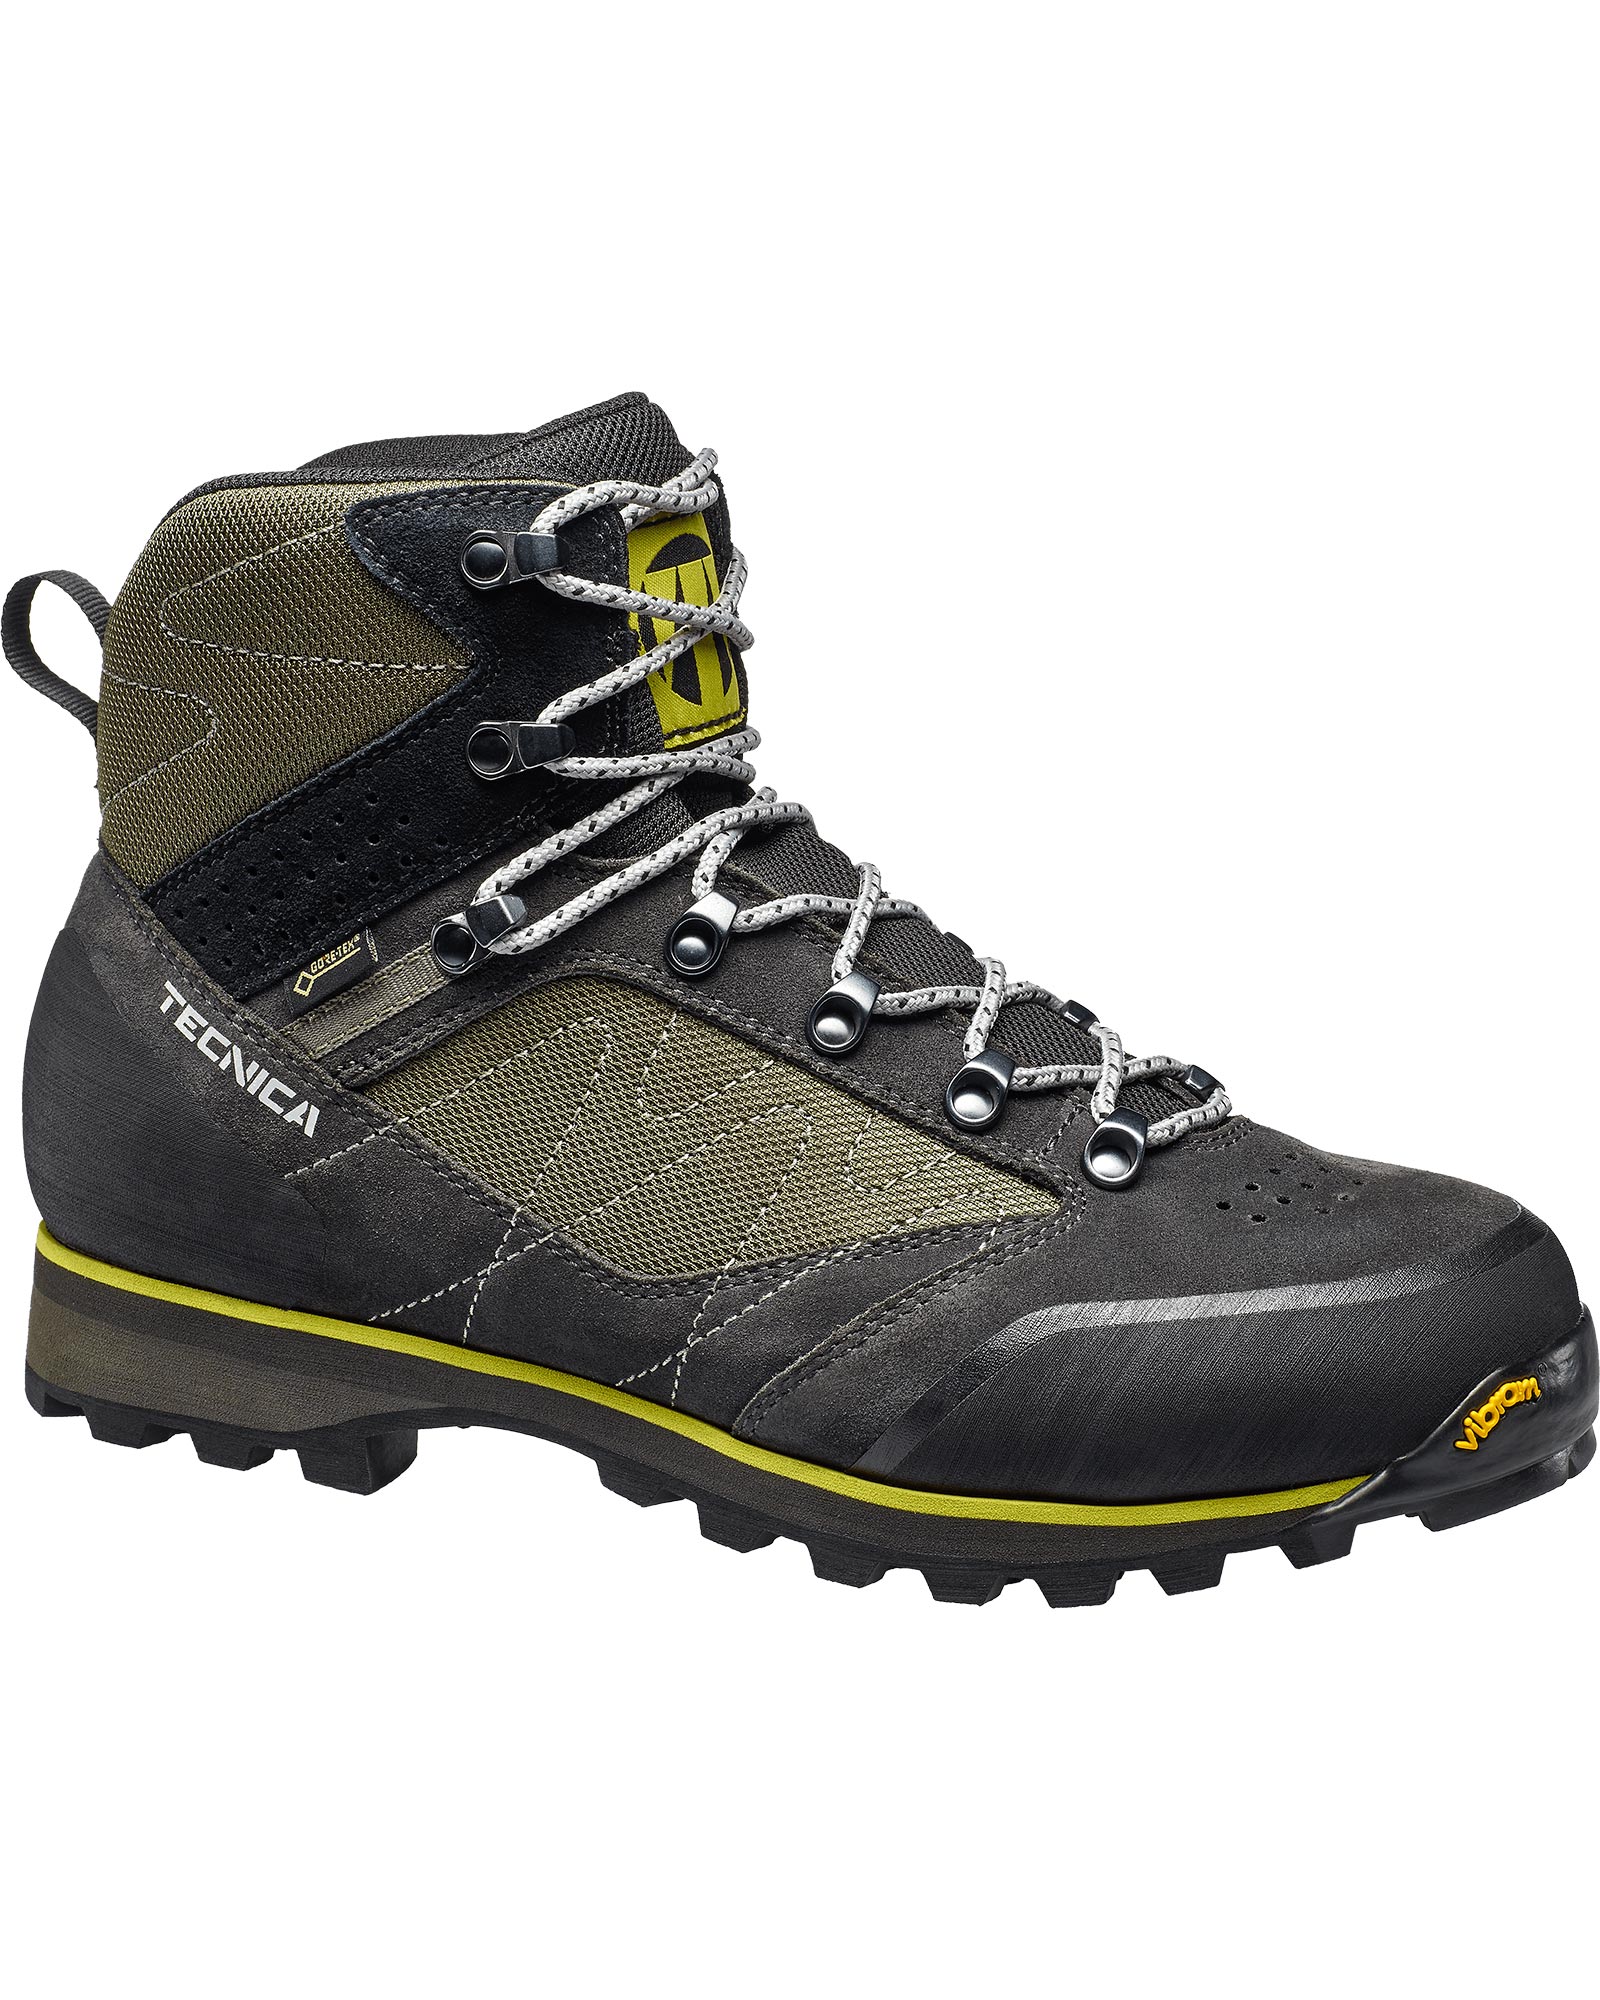 Tecnica Kilimanjaro II GORE TEX Men’s Boots - Shadow Giungla/Dusty Campo UK 9.5